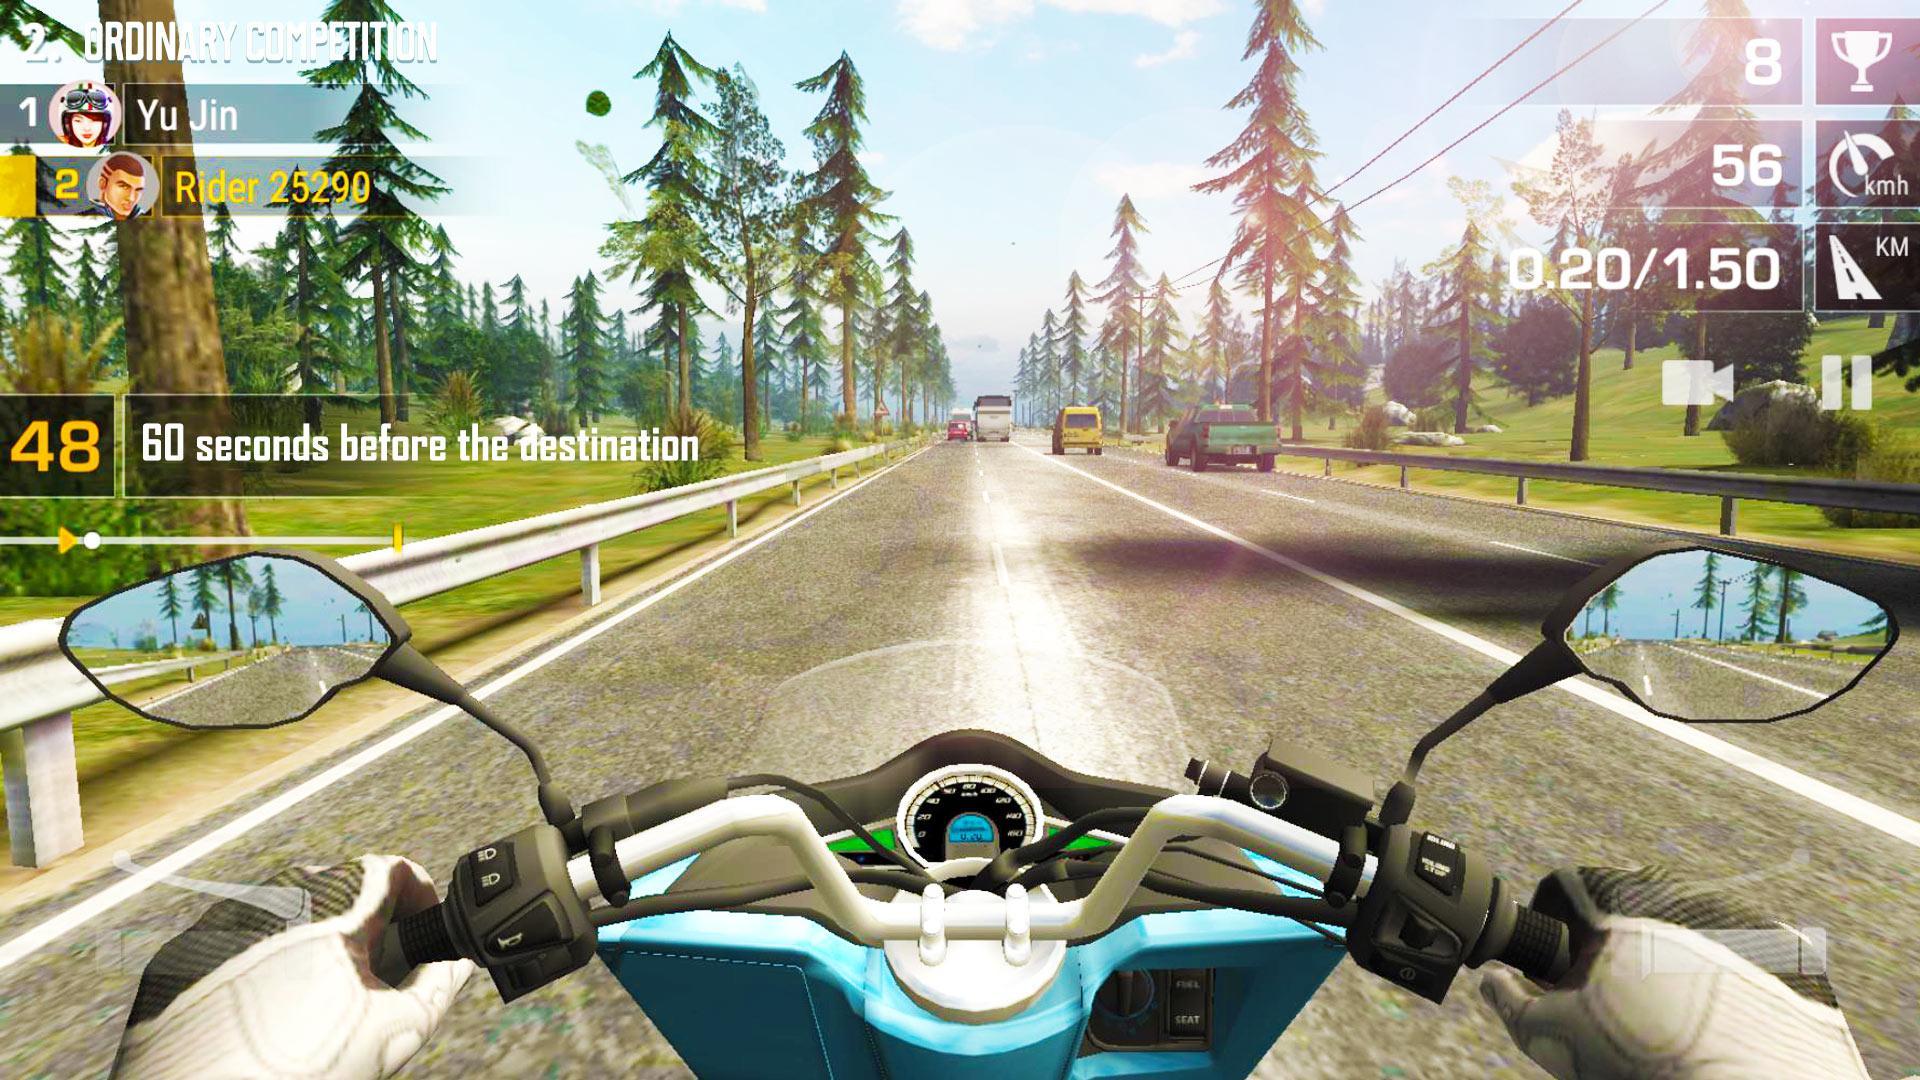 Screenshot 1 of Moto Racer : Circulation sur autoroute 1.0.4